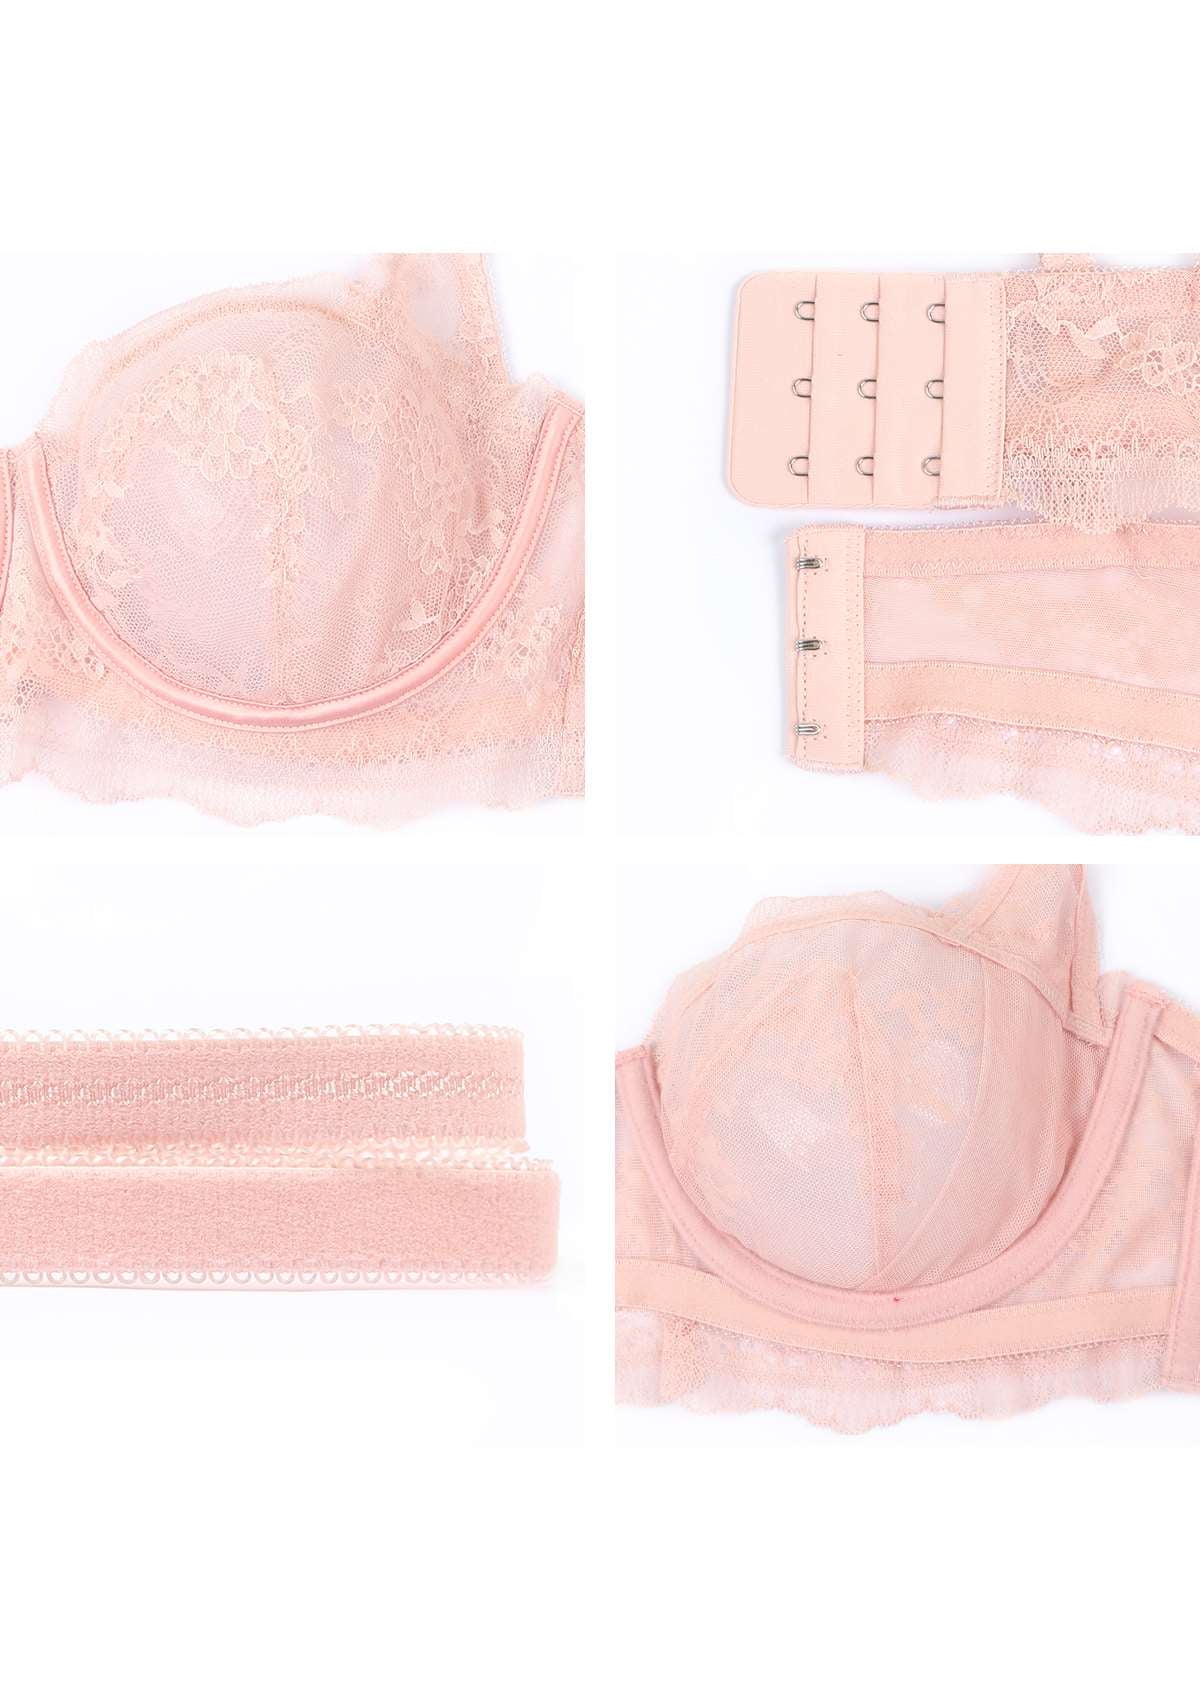 HSIA Floral Lace Unlined Bridal Balconette Delicate Bra Panty Set - Pink / 34 / DD/E